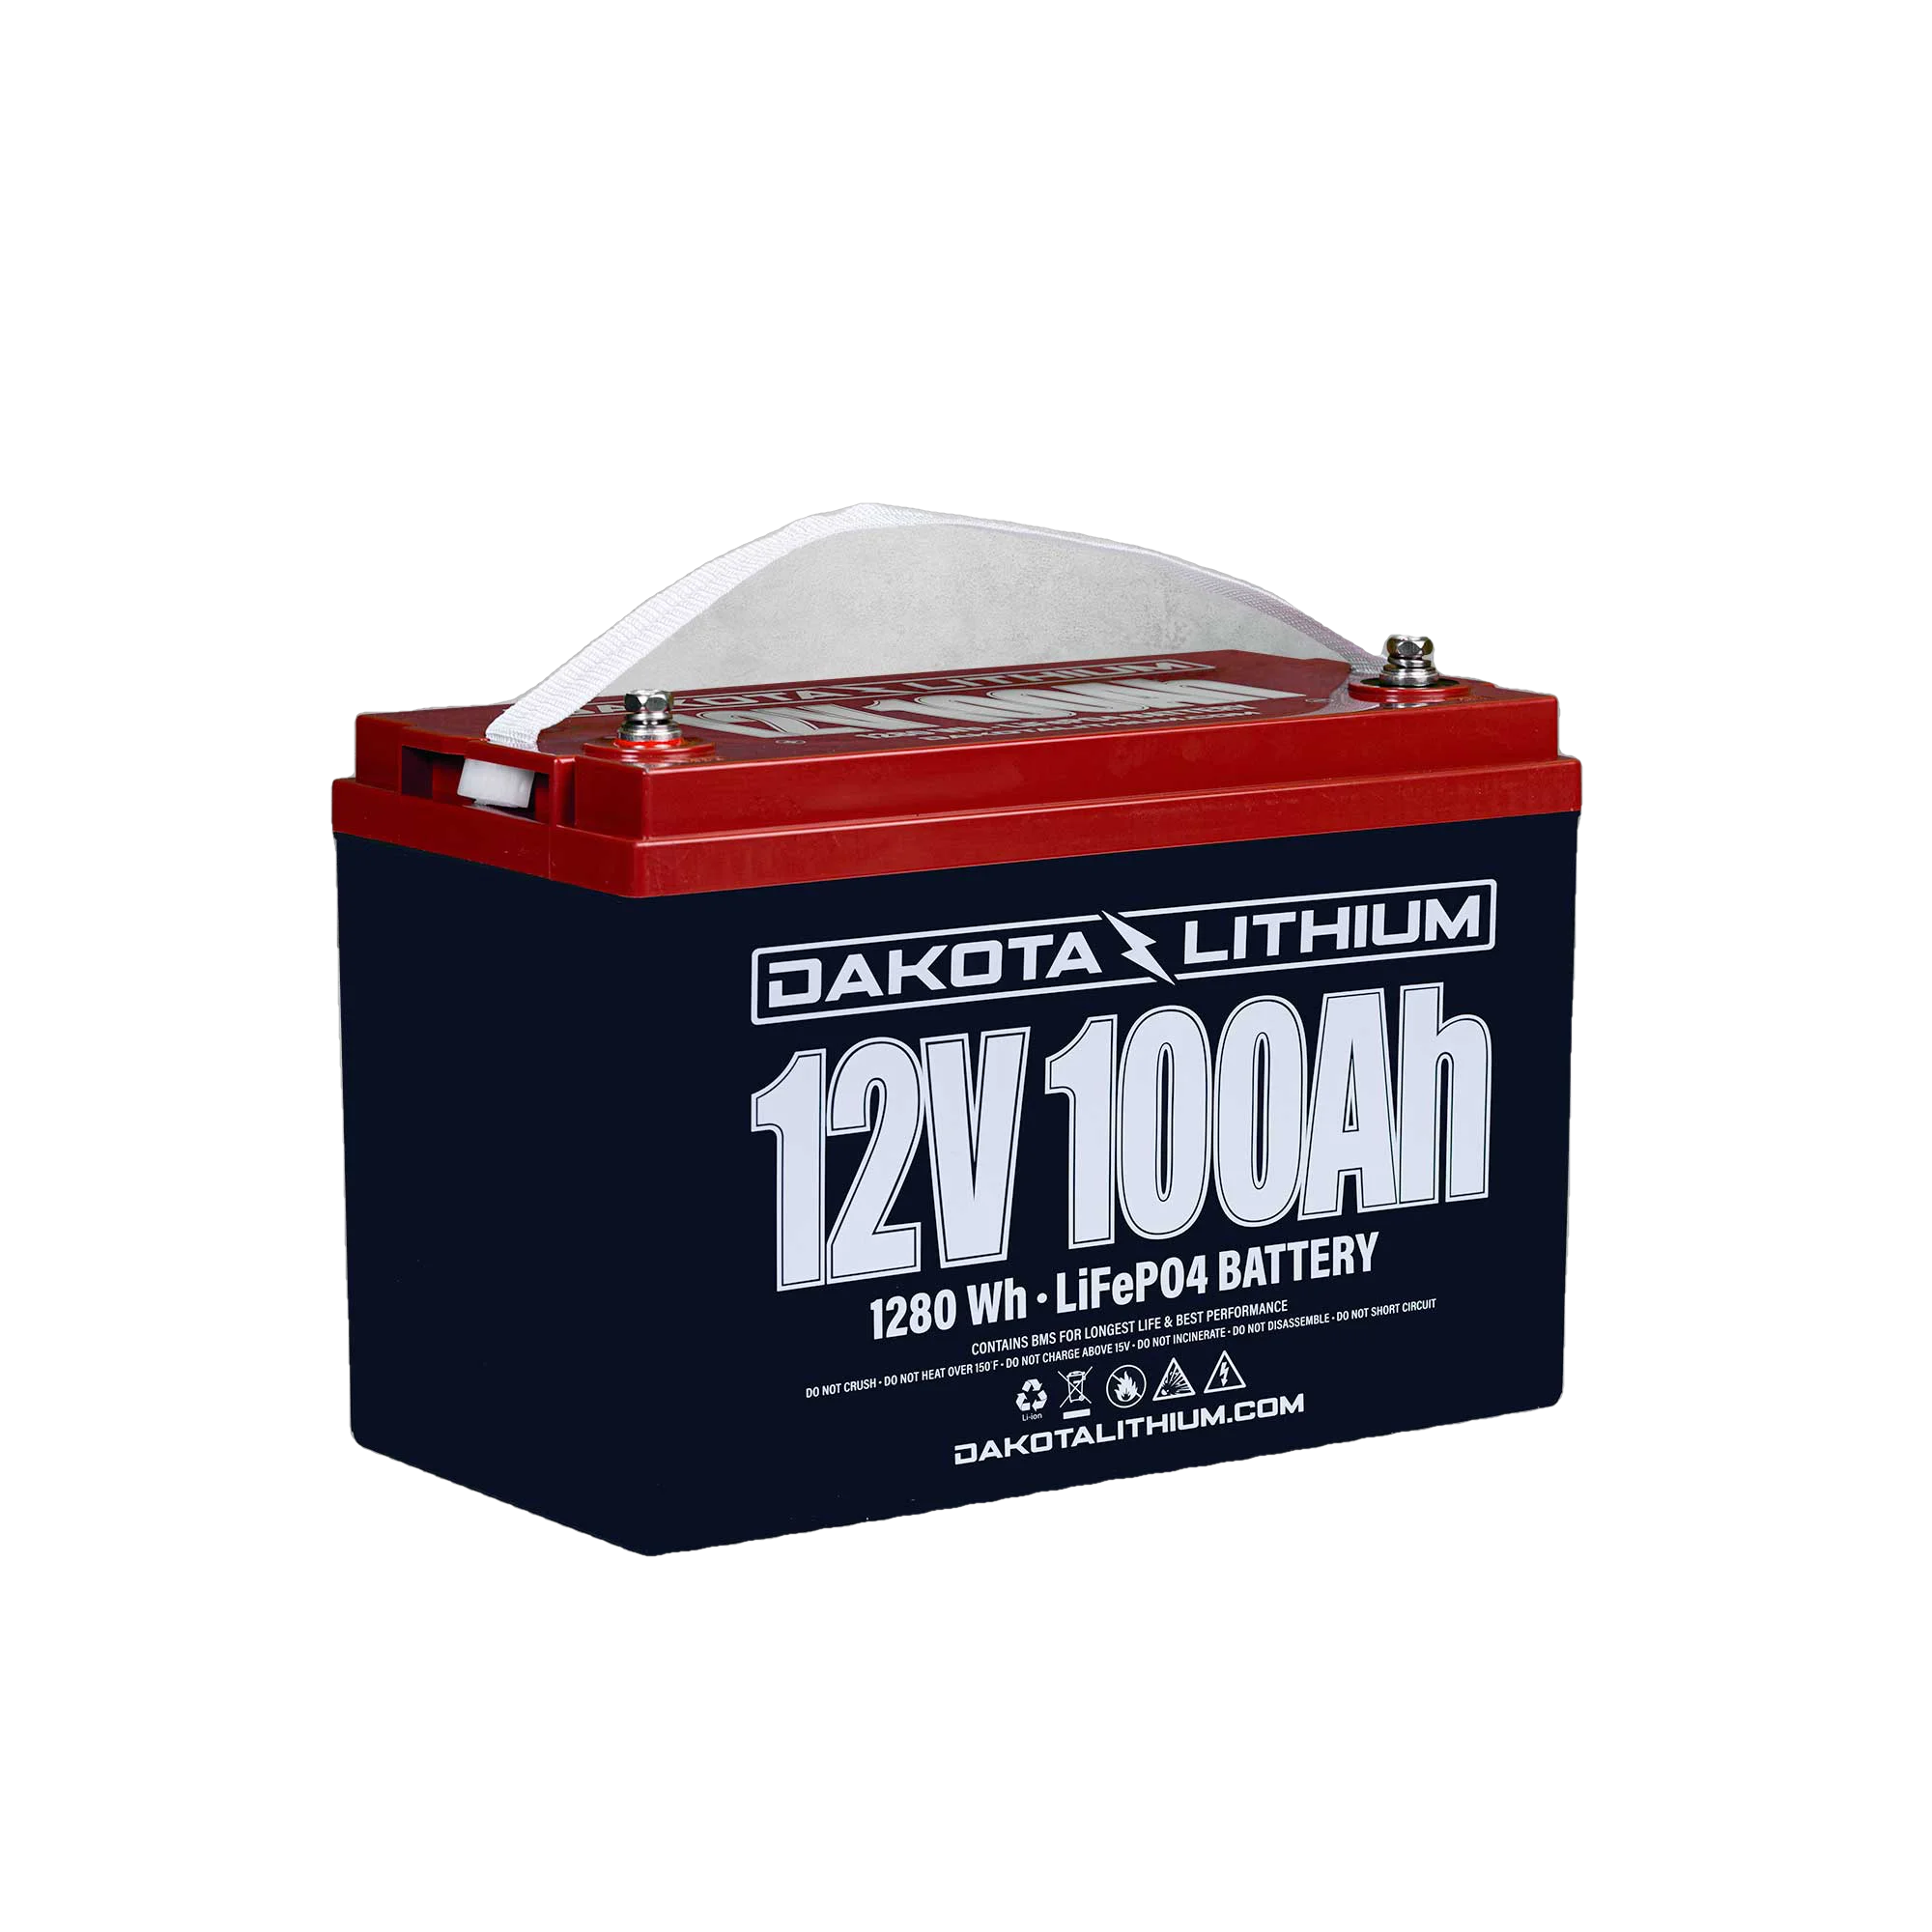 Dakota Lithium 12V 100AH Trailer / RV battery – KC Turbos